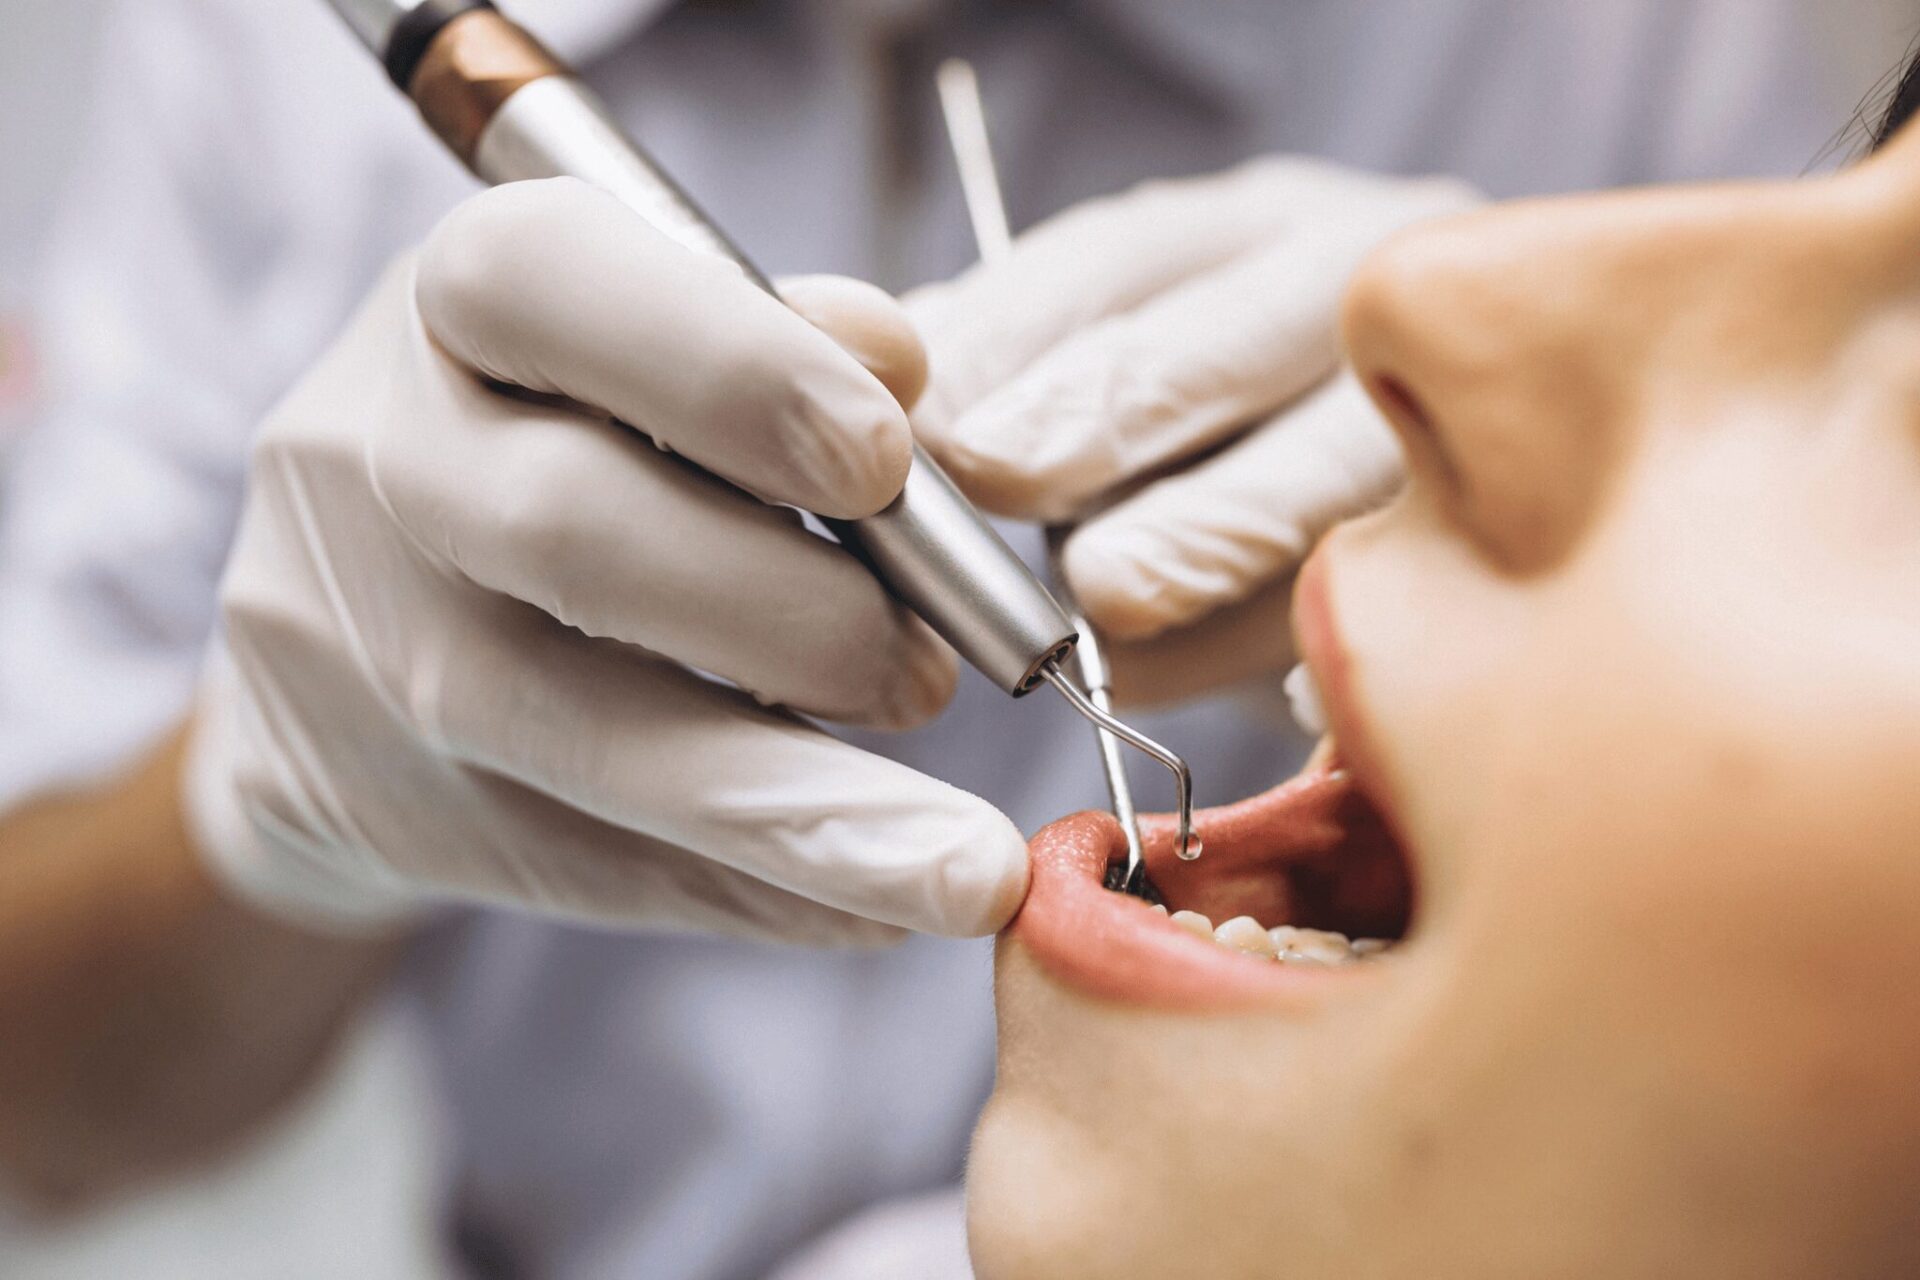 dentist performing dental filling procedure